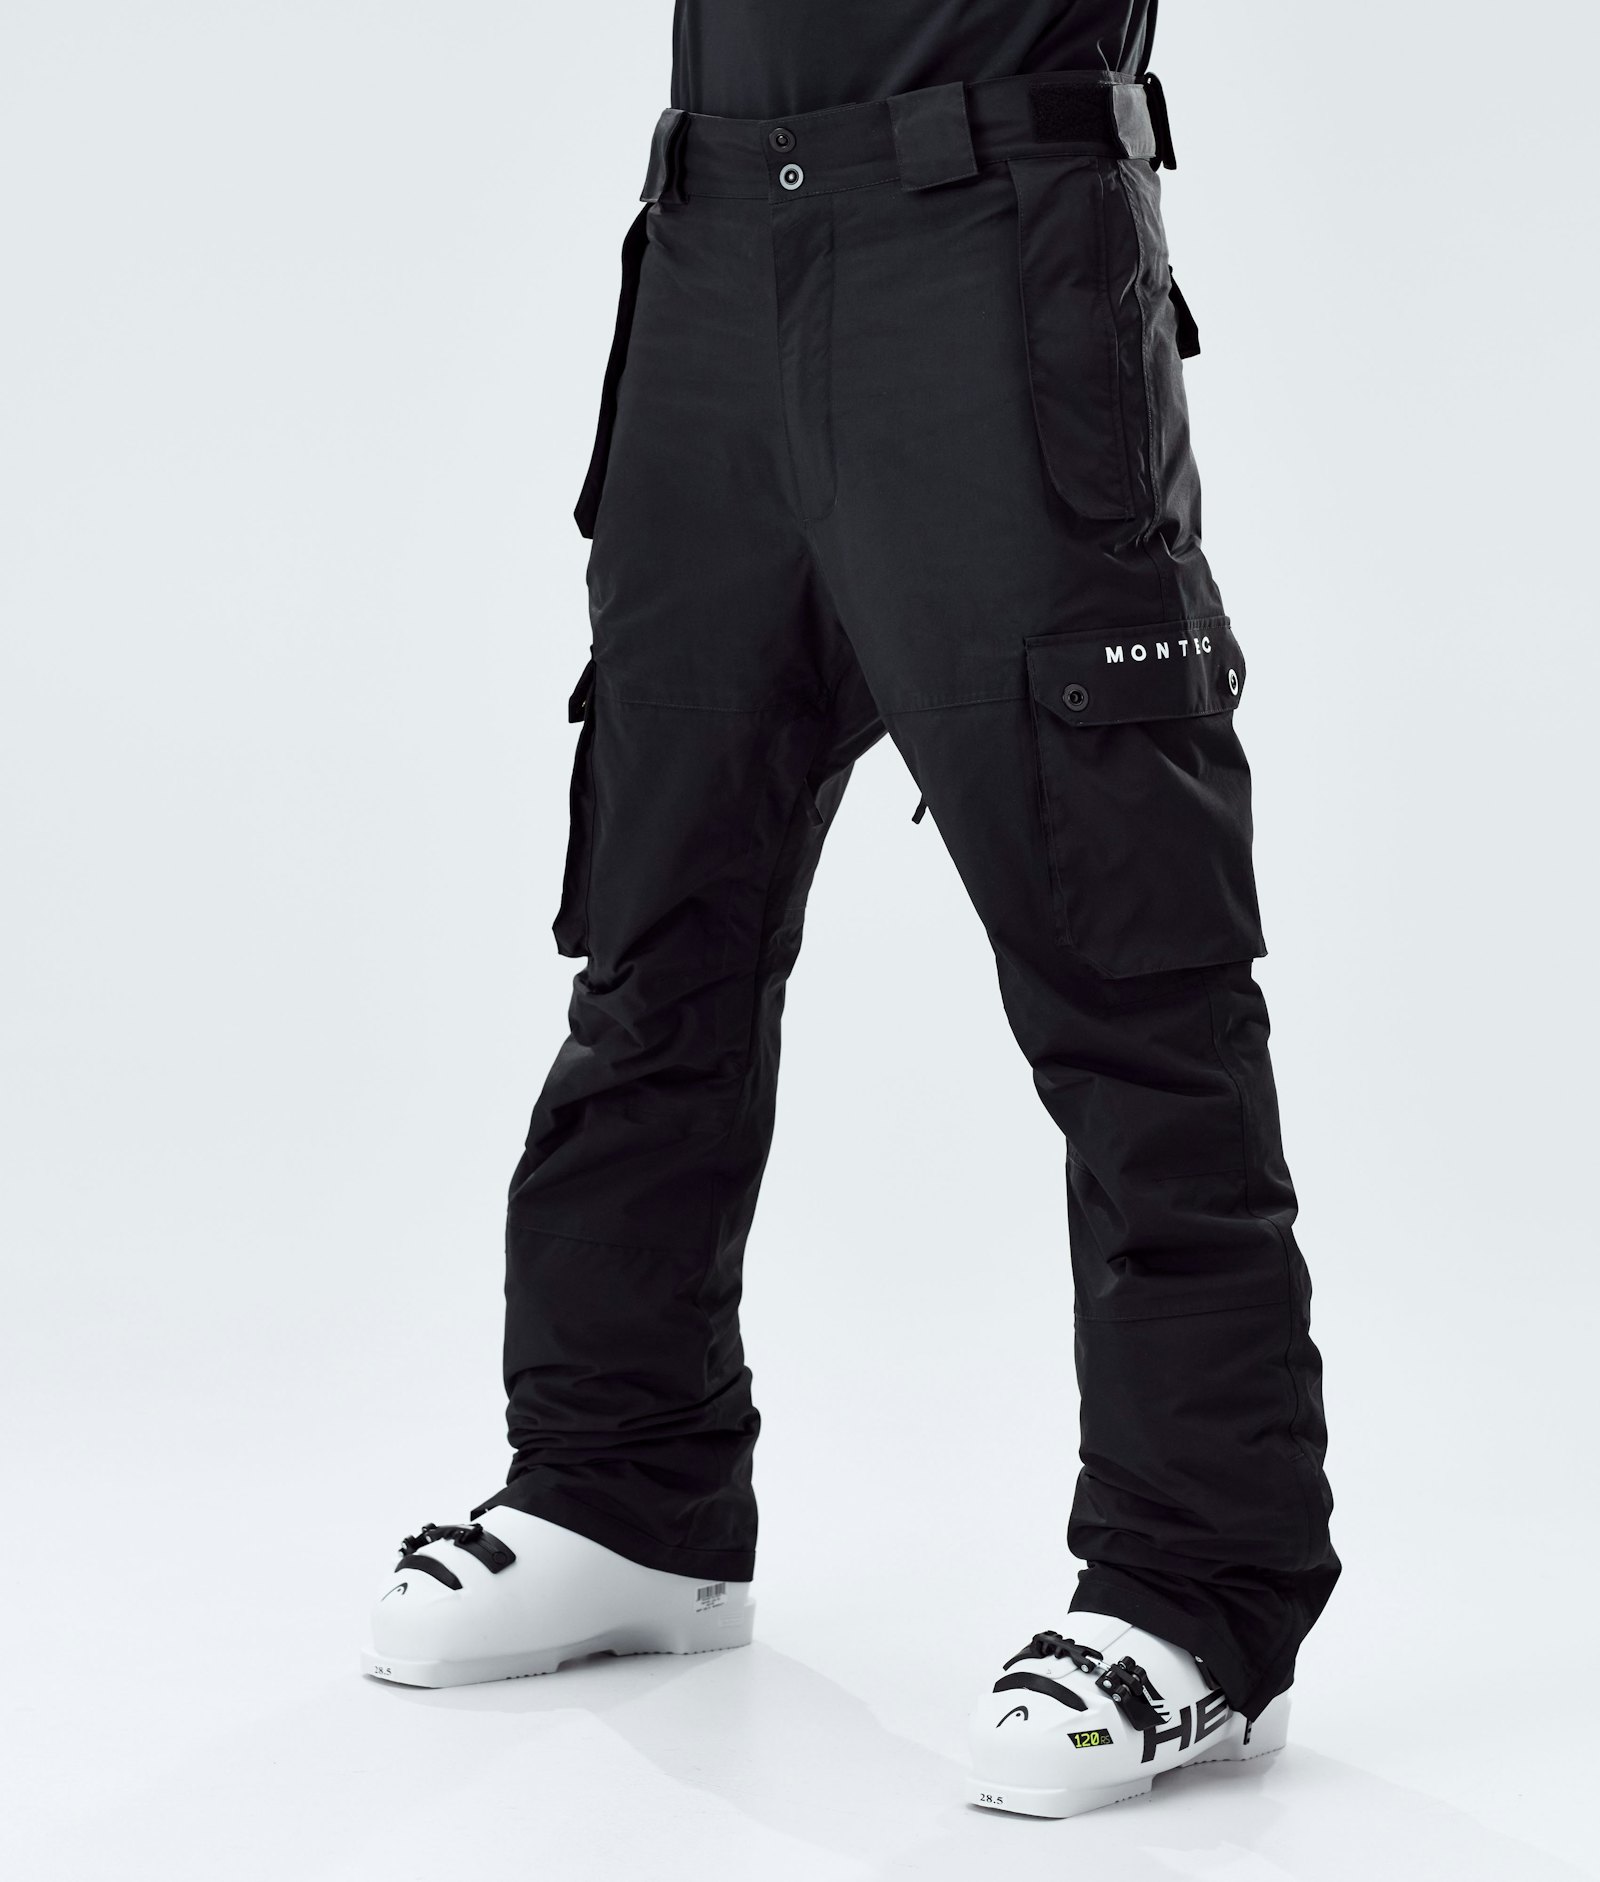 Doom 2020 Pantalon de Ski Homme Black, Image 1 sur 6